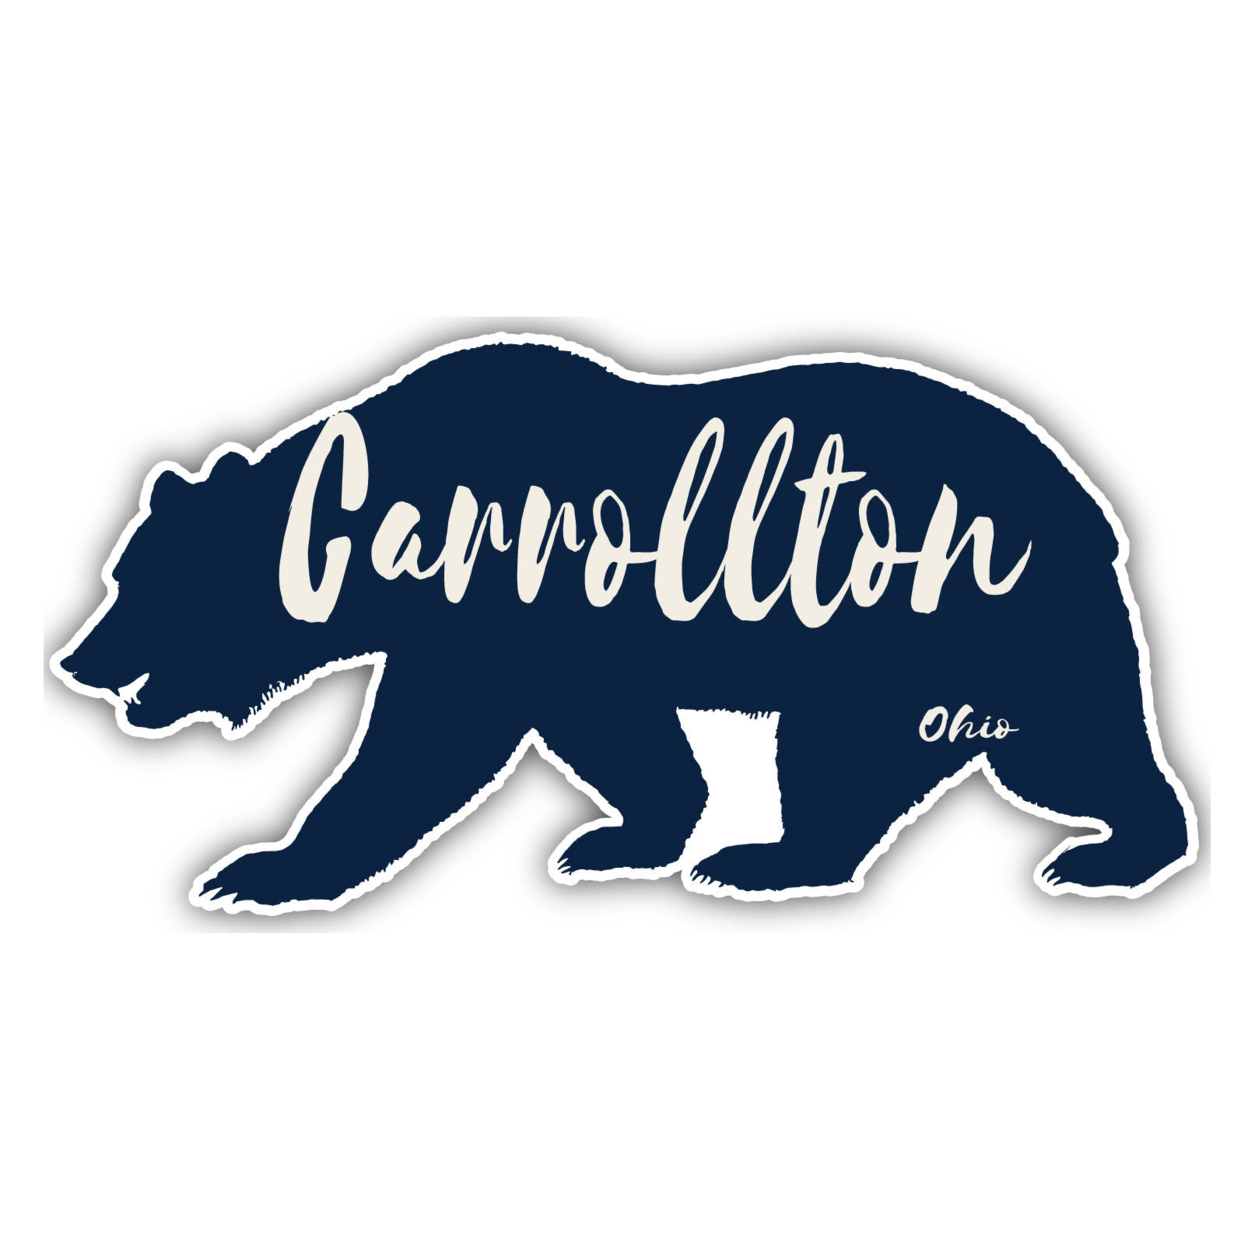 Carrollton Ohio Souvenir Decorative Stickers (Choose Theme And Size) - 4-Pack, 2-Inch, Bear